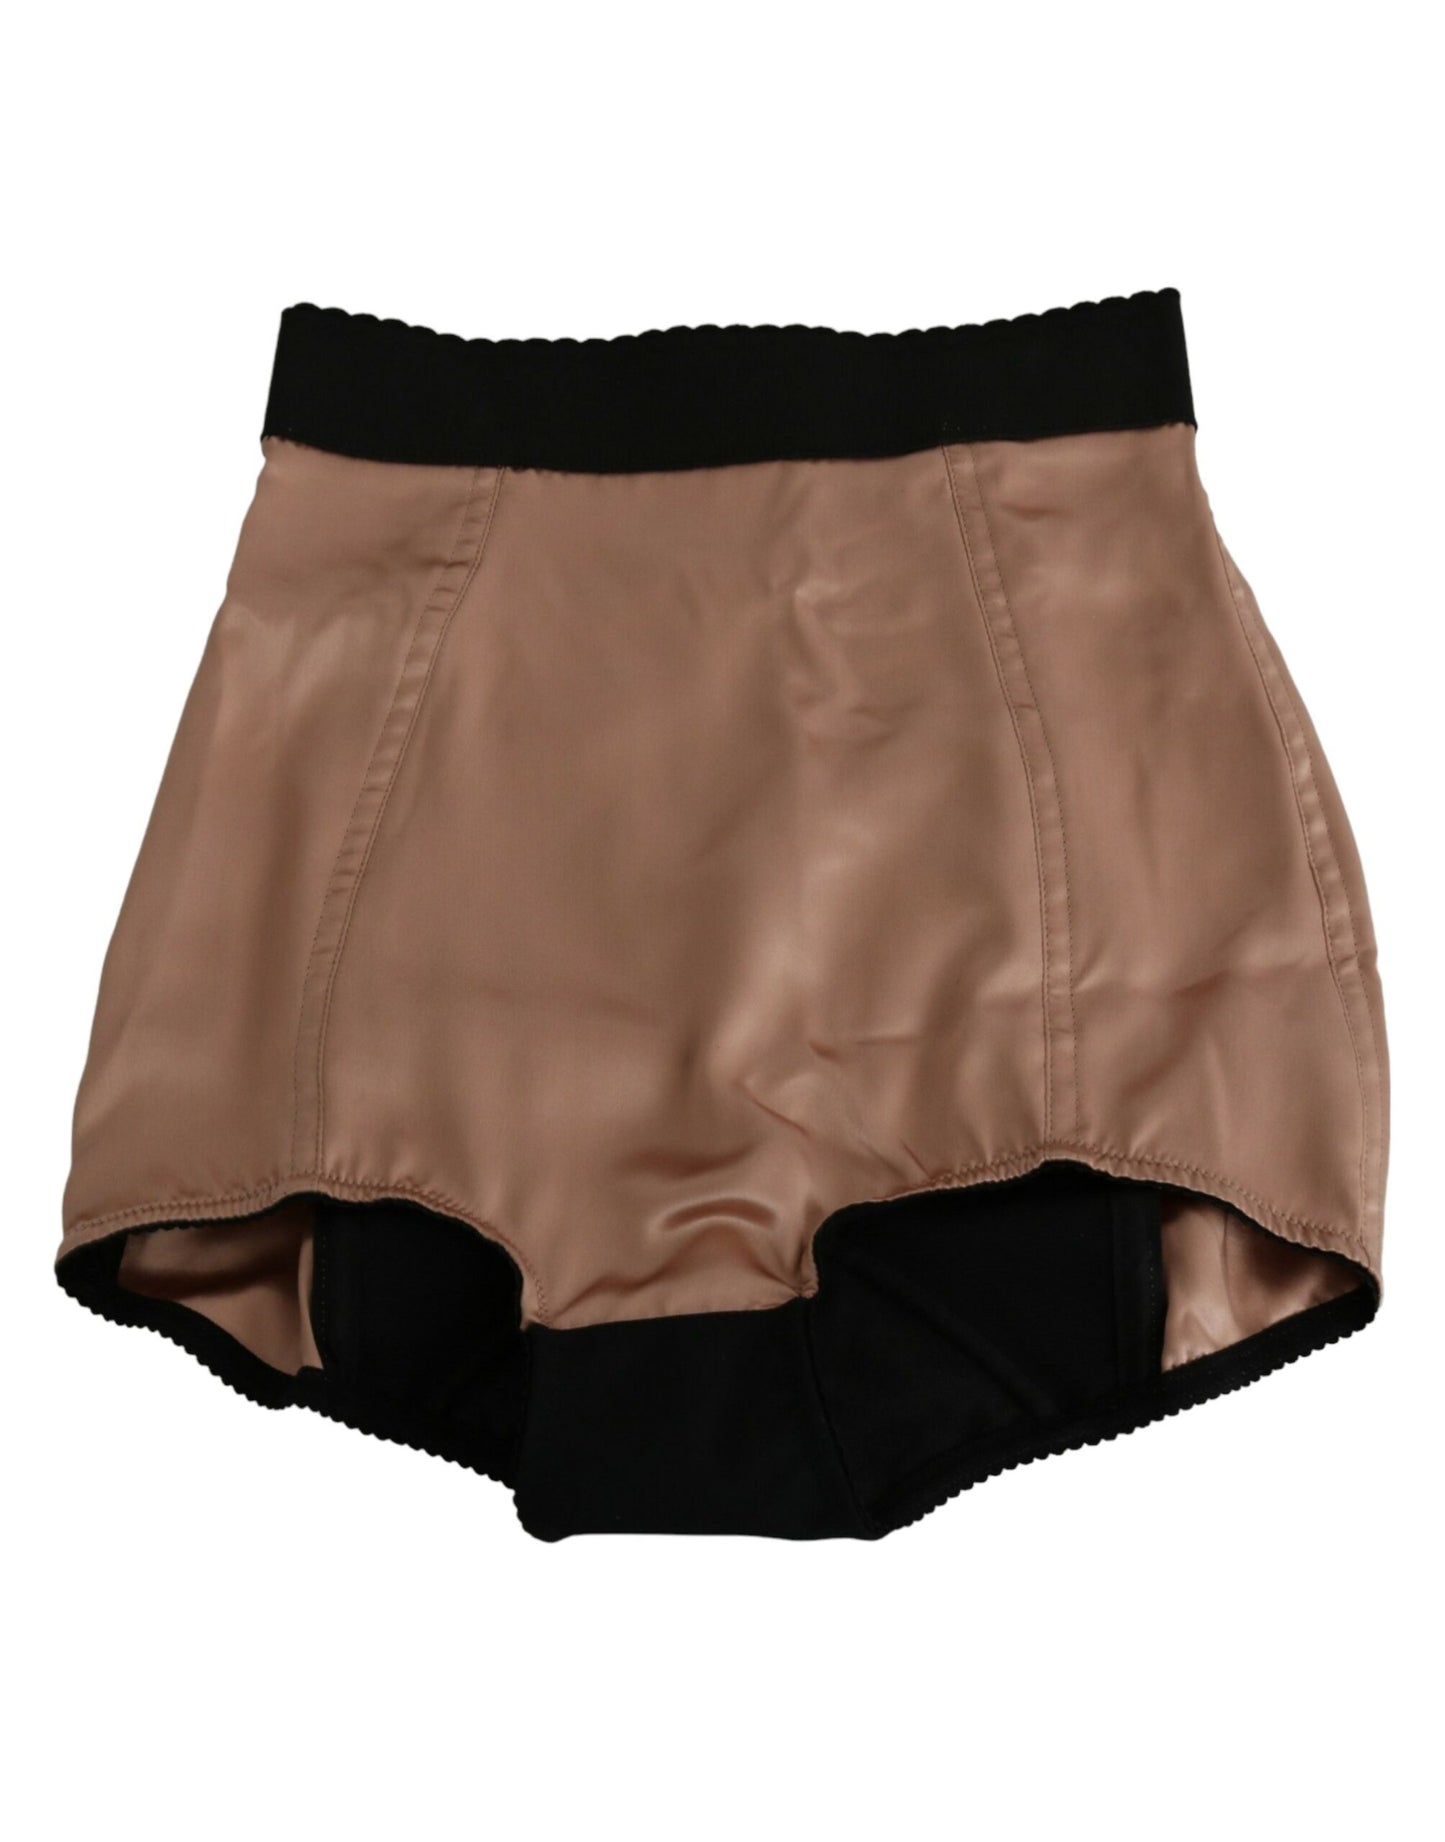 Beige Silk High Waist Mini Hot Pants Shorts